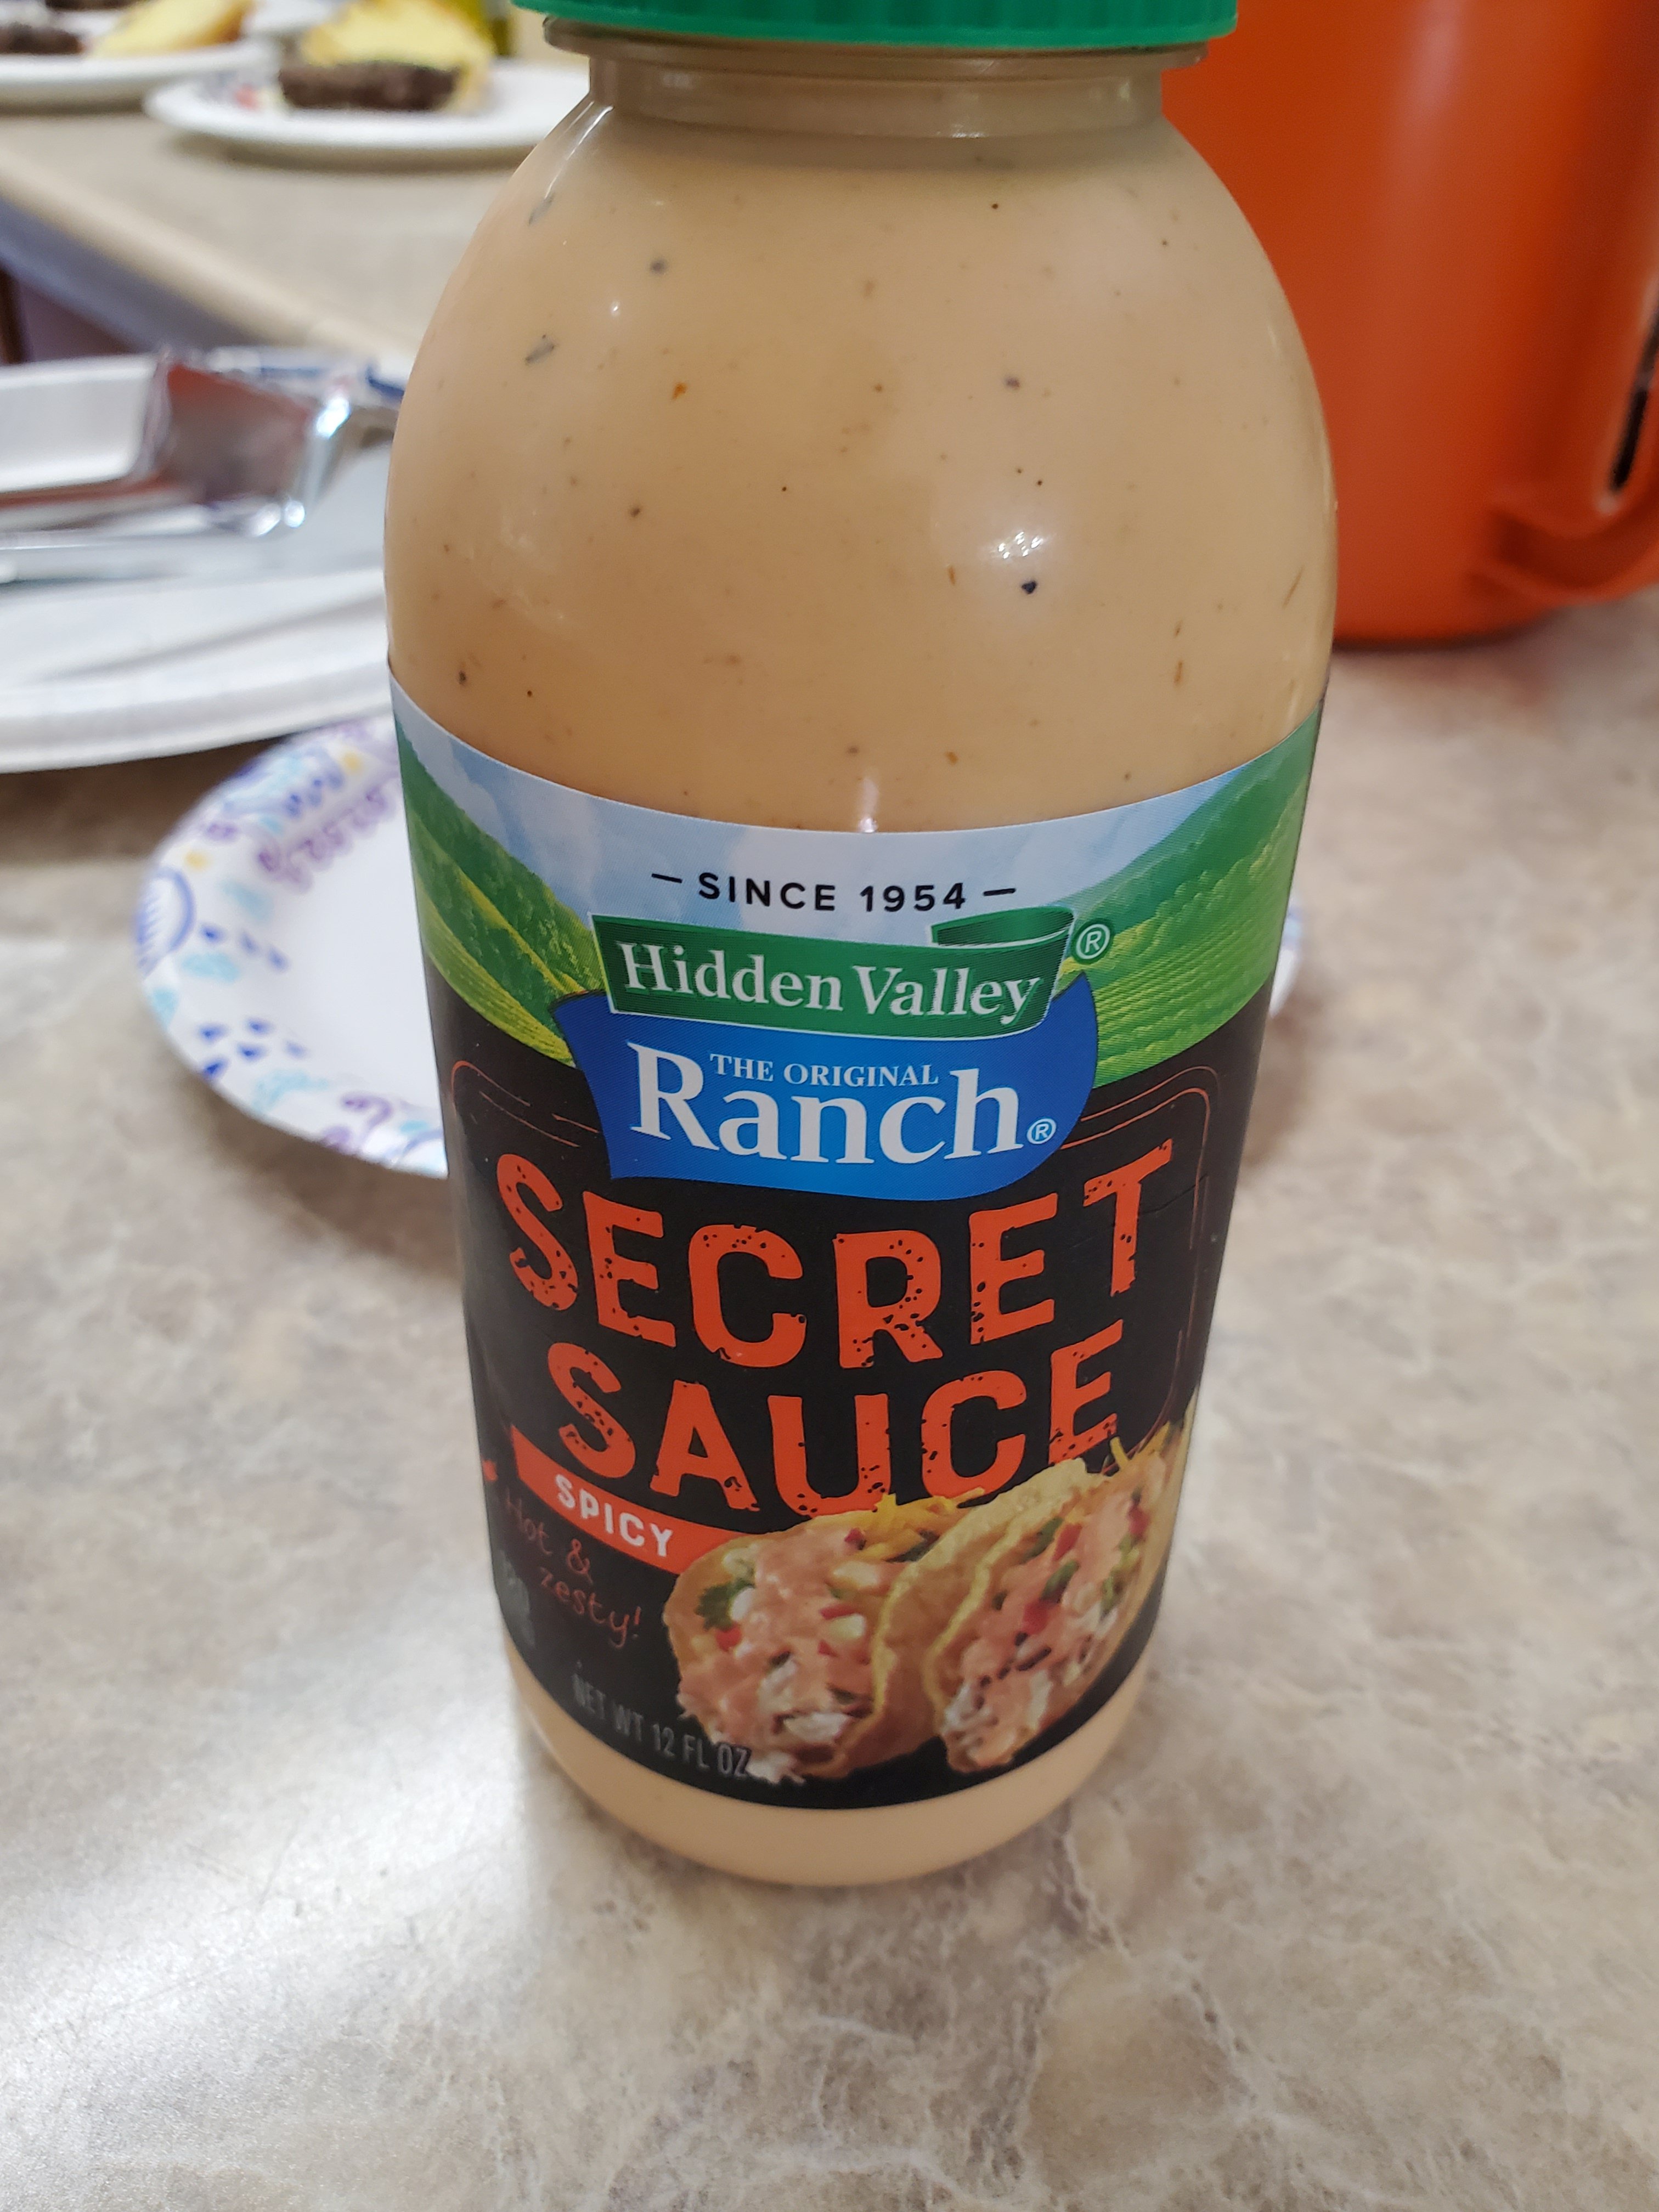 Carbs in Hidden Valley Ranch Secret Sauce